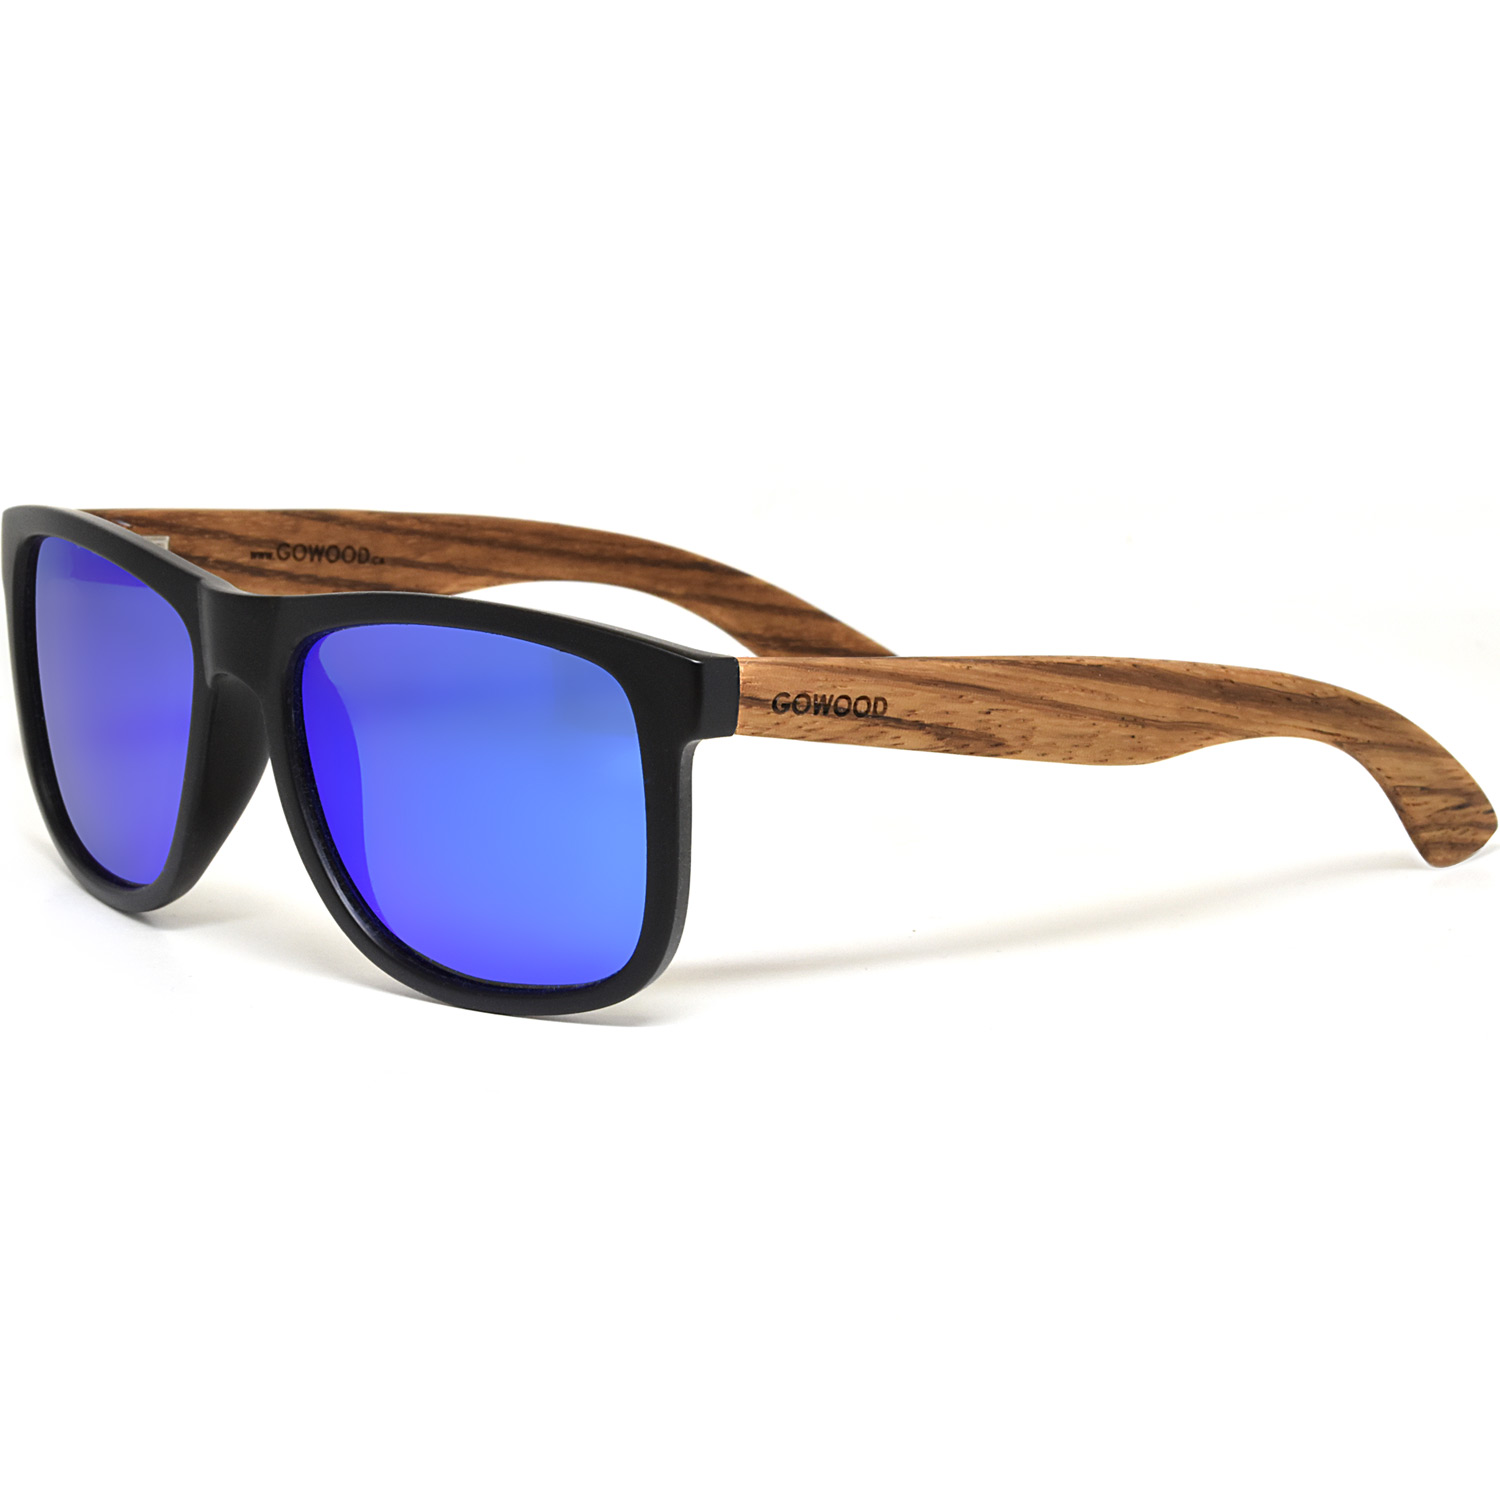 Square zebra wood sunglasses blue mirrored polarized lenses left